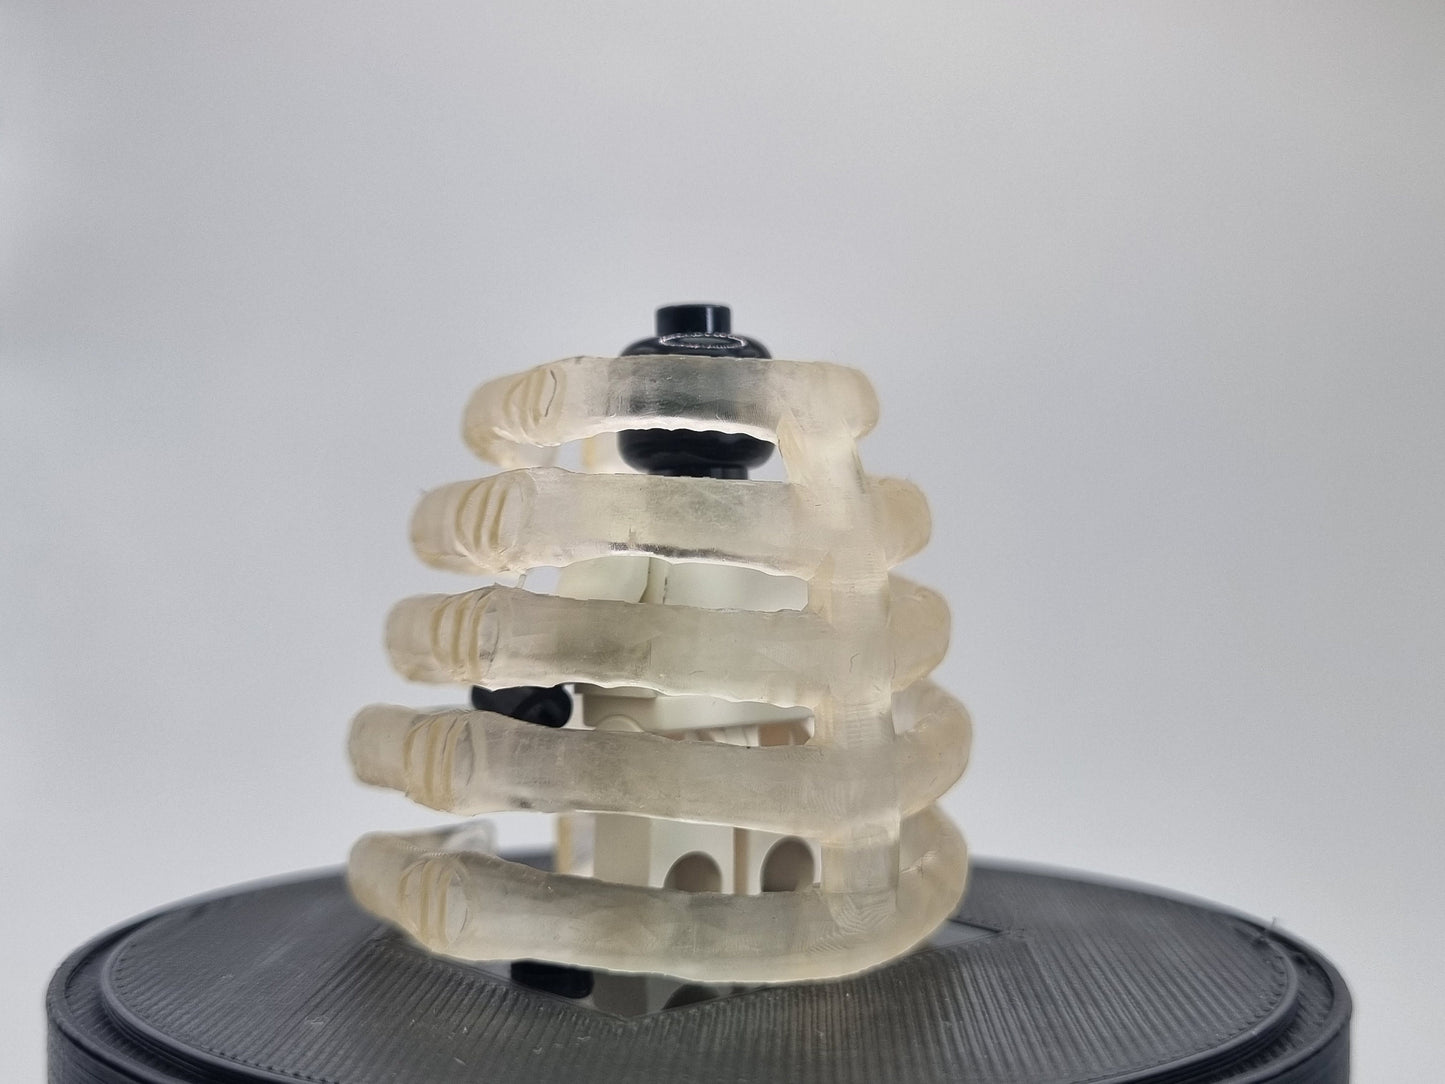 Building toy custom 3D printed ninja ribcage!